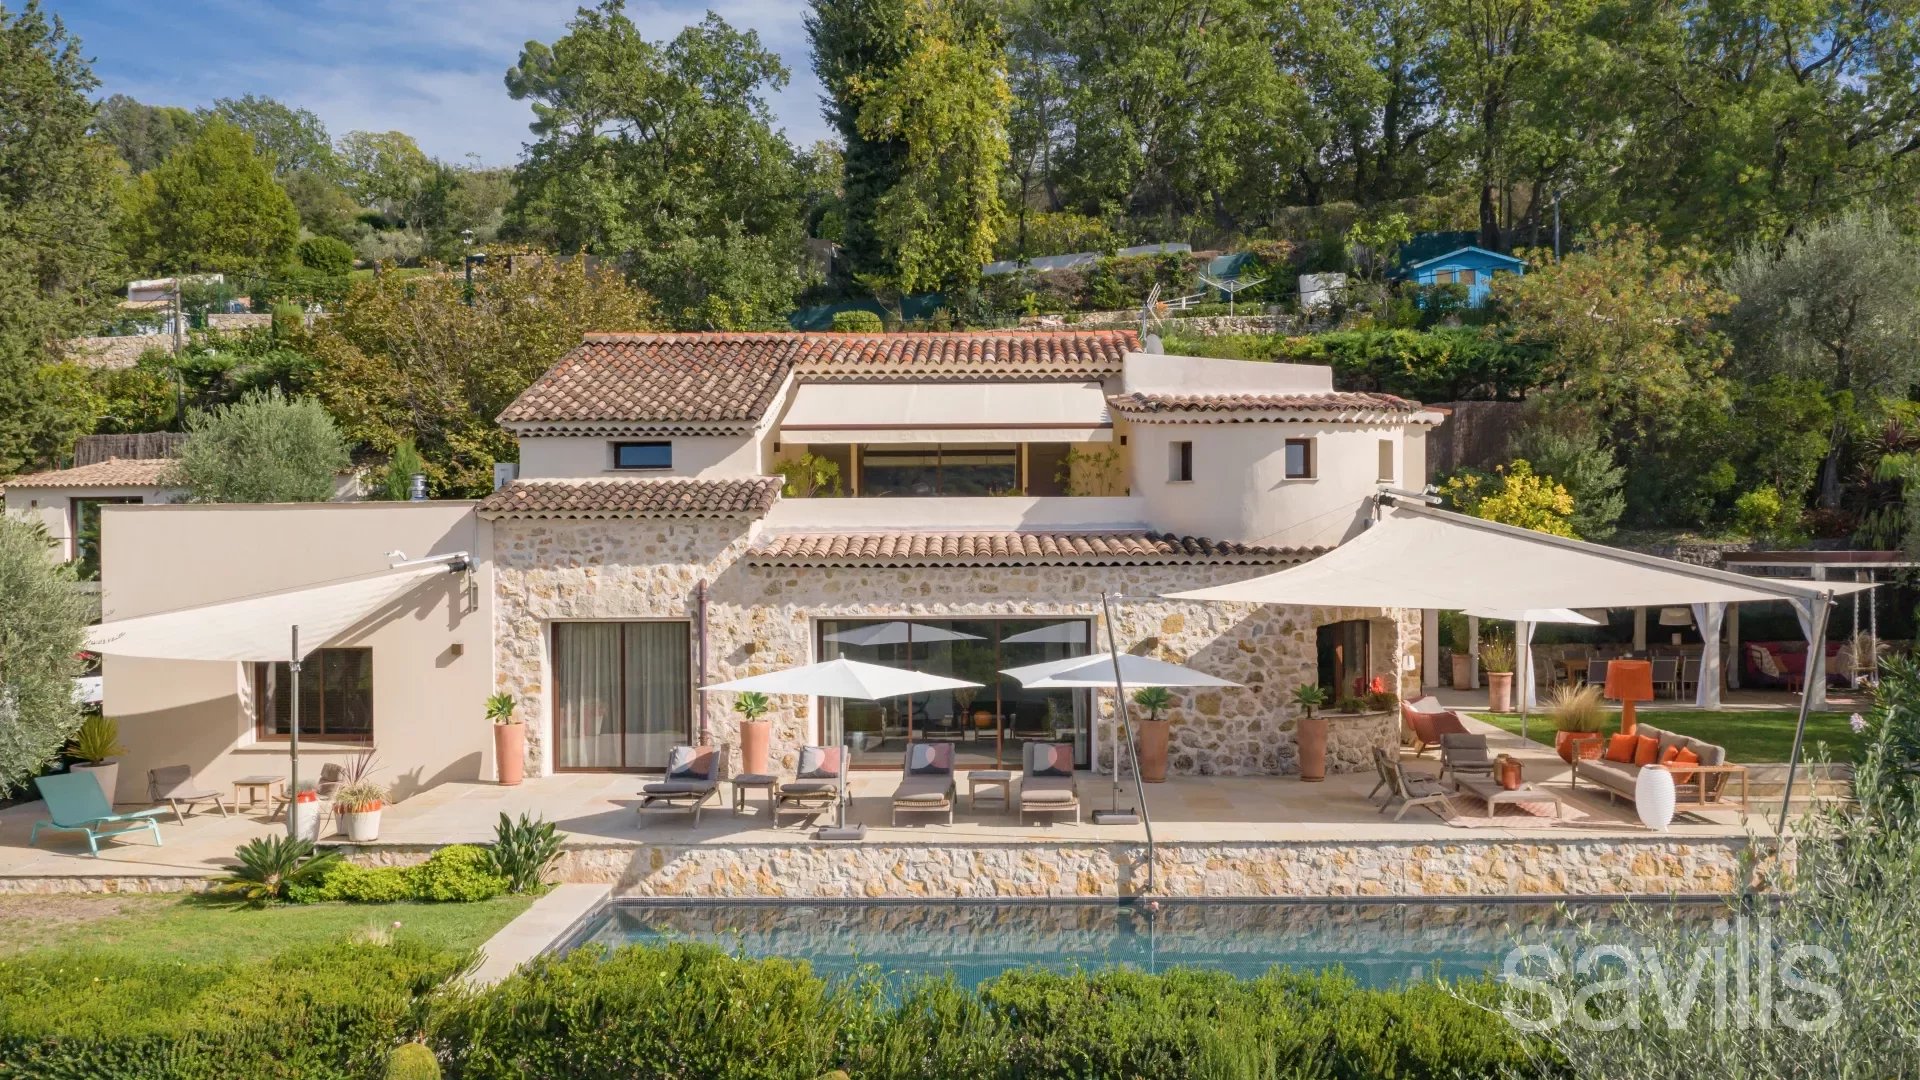 Beautiful provencal style villa